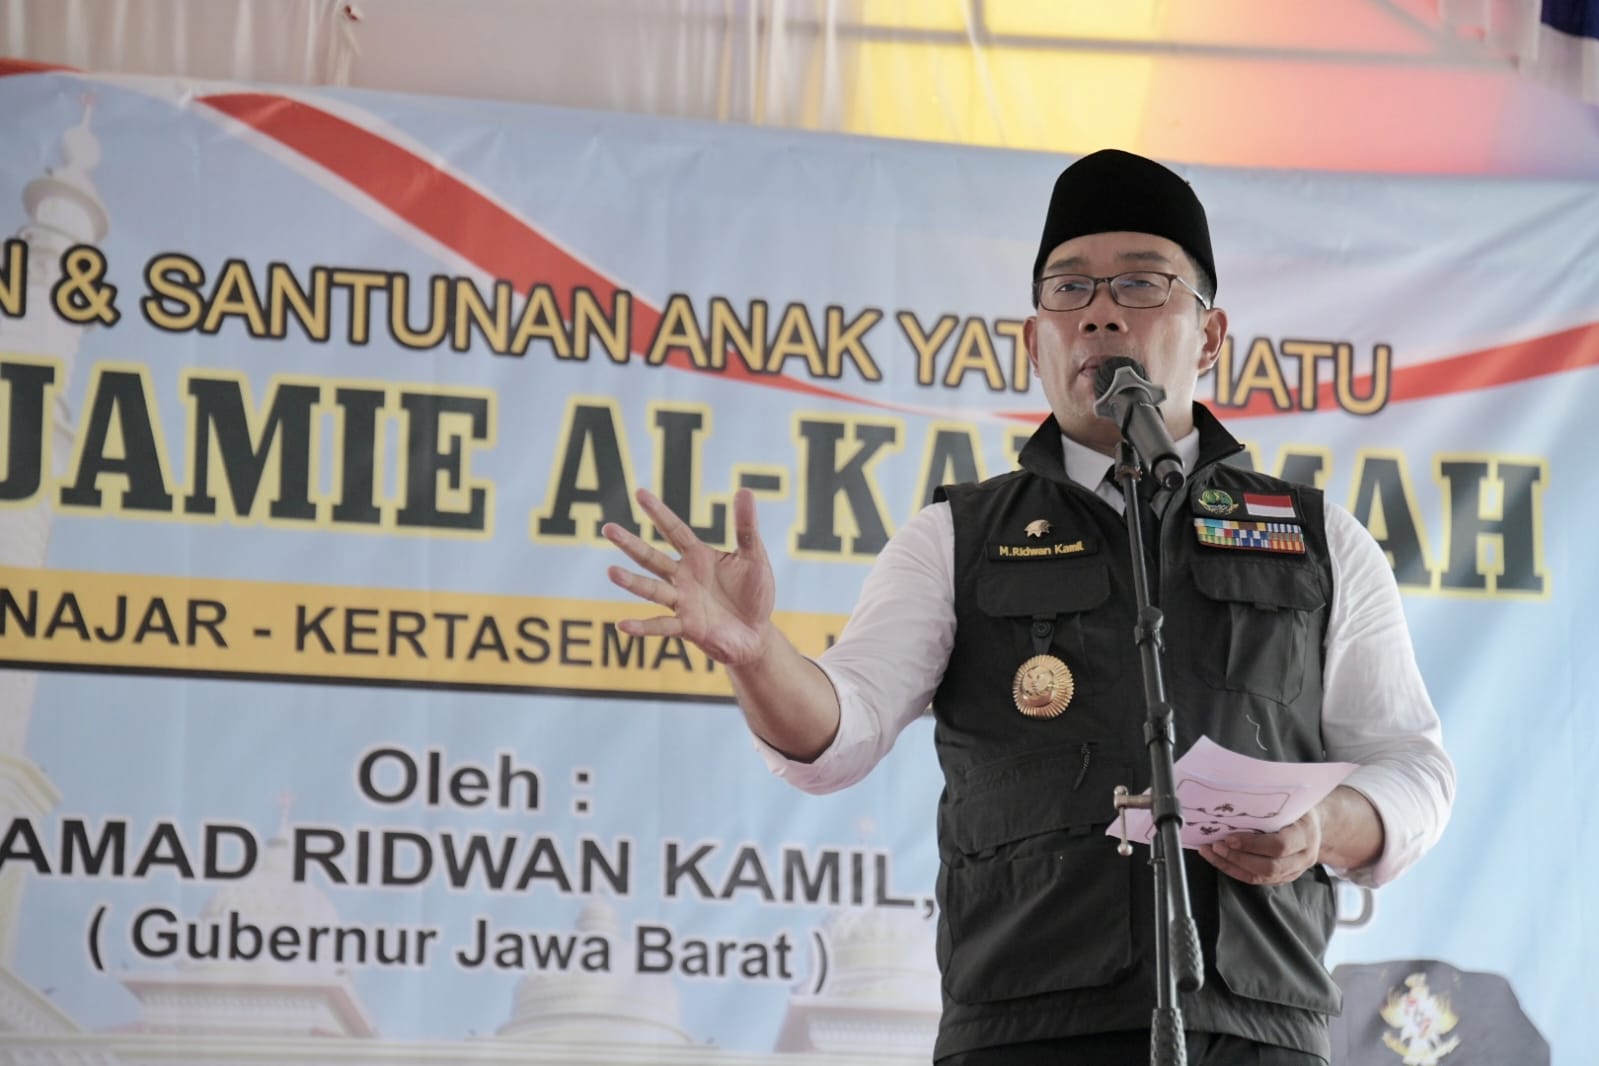 Pasca Lengser dari Jabatan Gubernur, Ridwan Kamil Bertekad Tak Berhenti Bangun Masjid